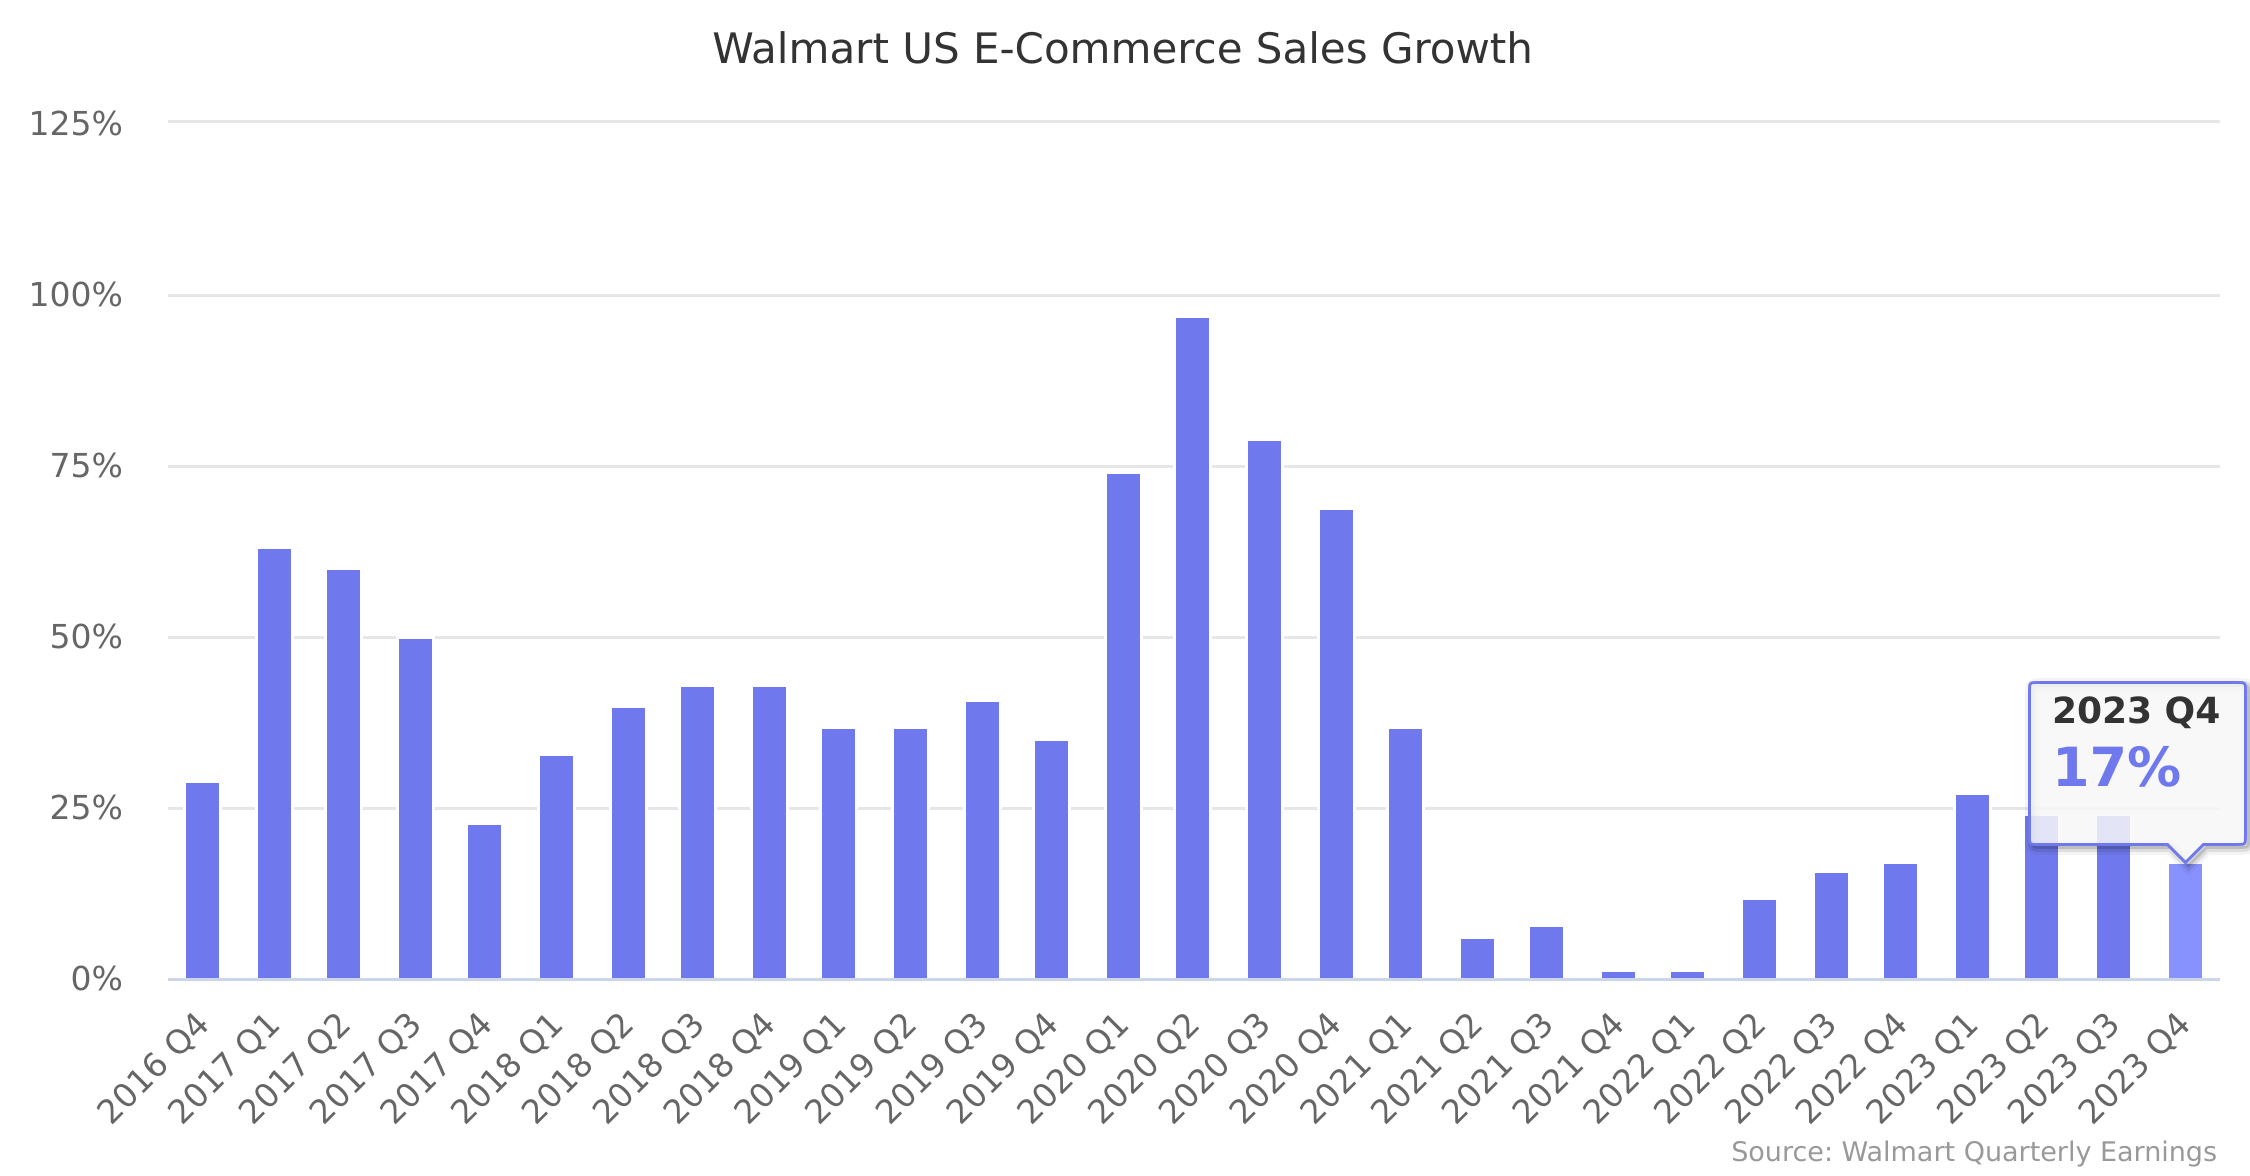 Walmart US E-Commerce Sales Growth 2016-2023